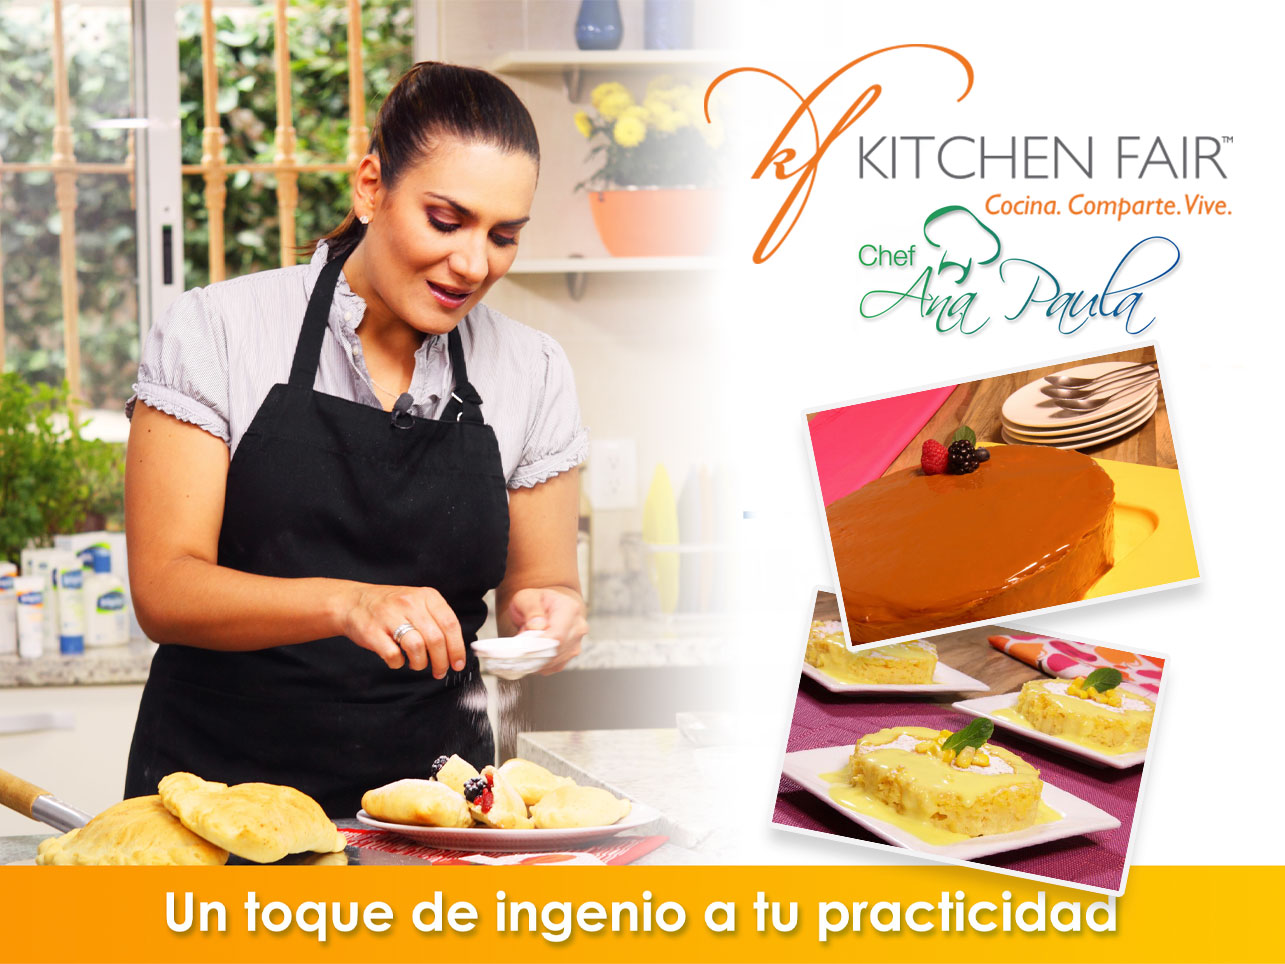 Clase de Cocina con Chef Ana Paula: Pastel 3 Leches y Torta de Elote |  Kitchen Fair